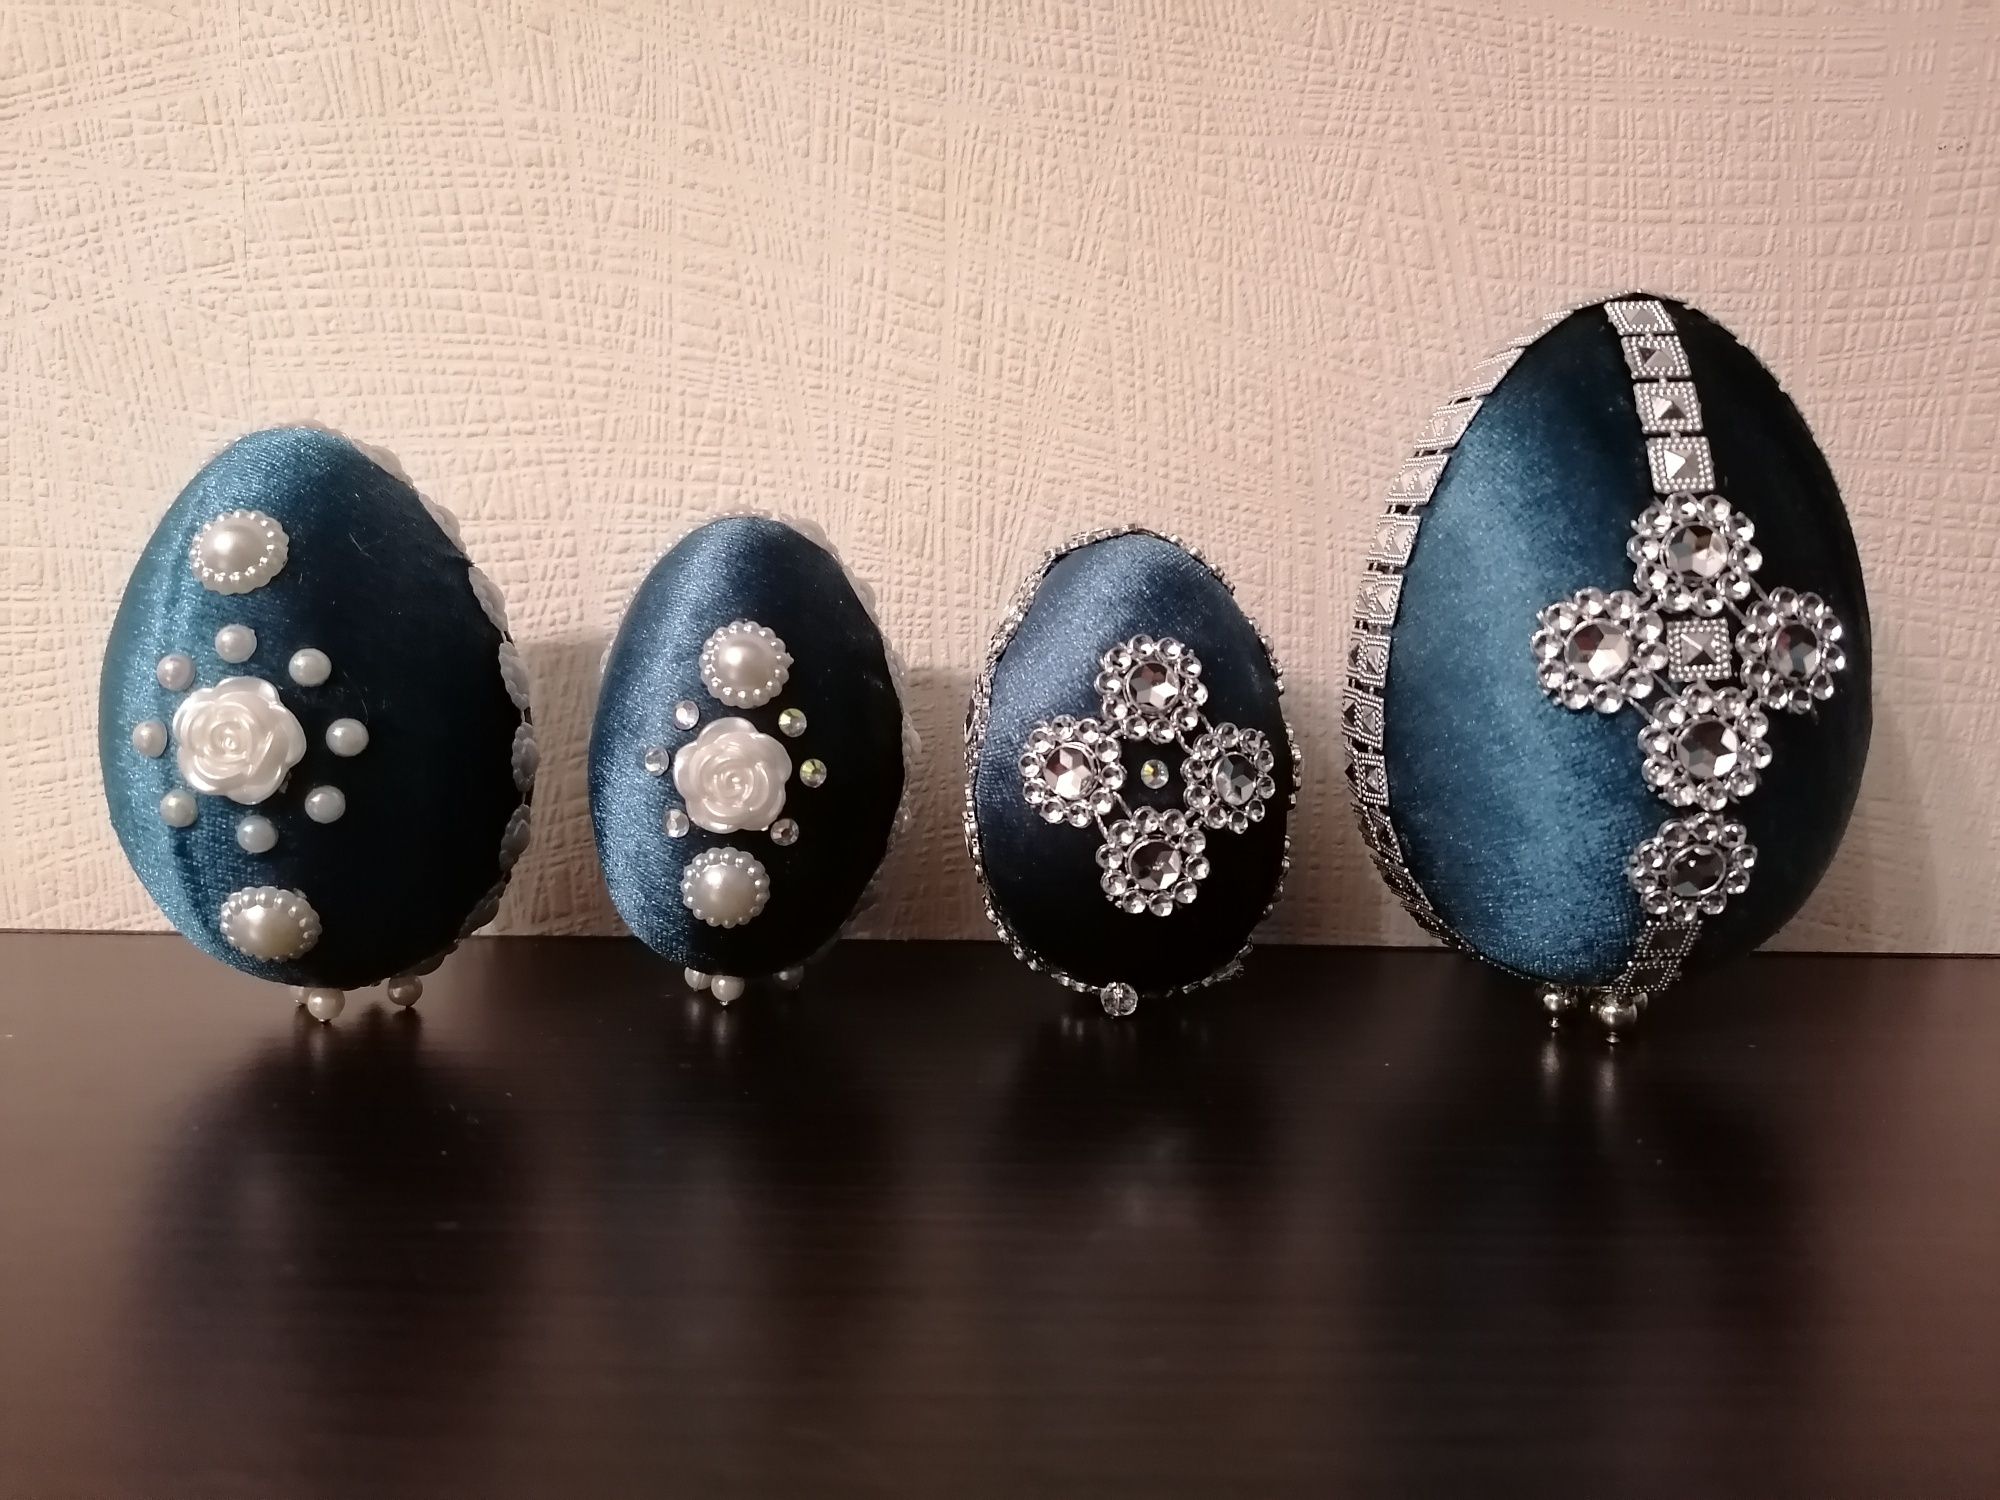 Jajka Wielkanocne, Wielkanoc, handmade, dekoracje